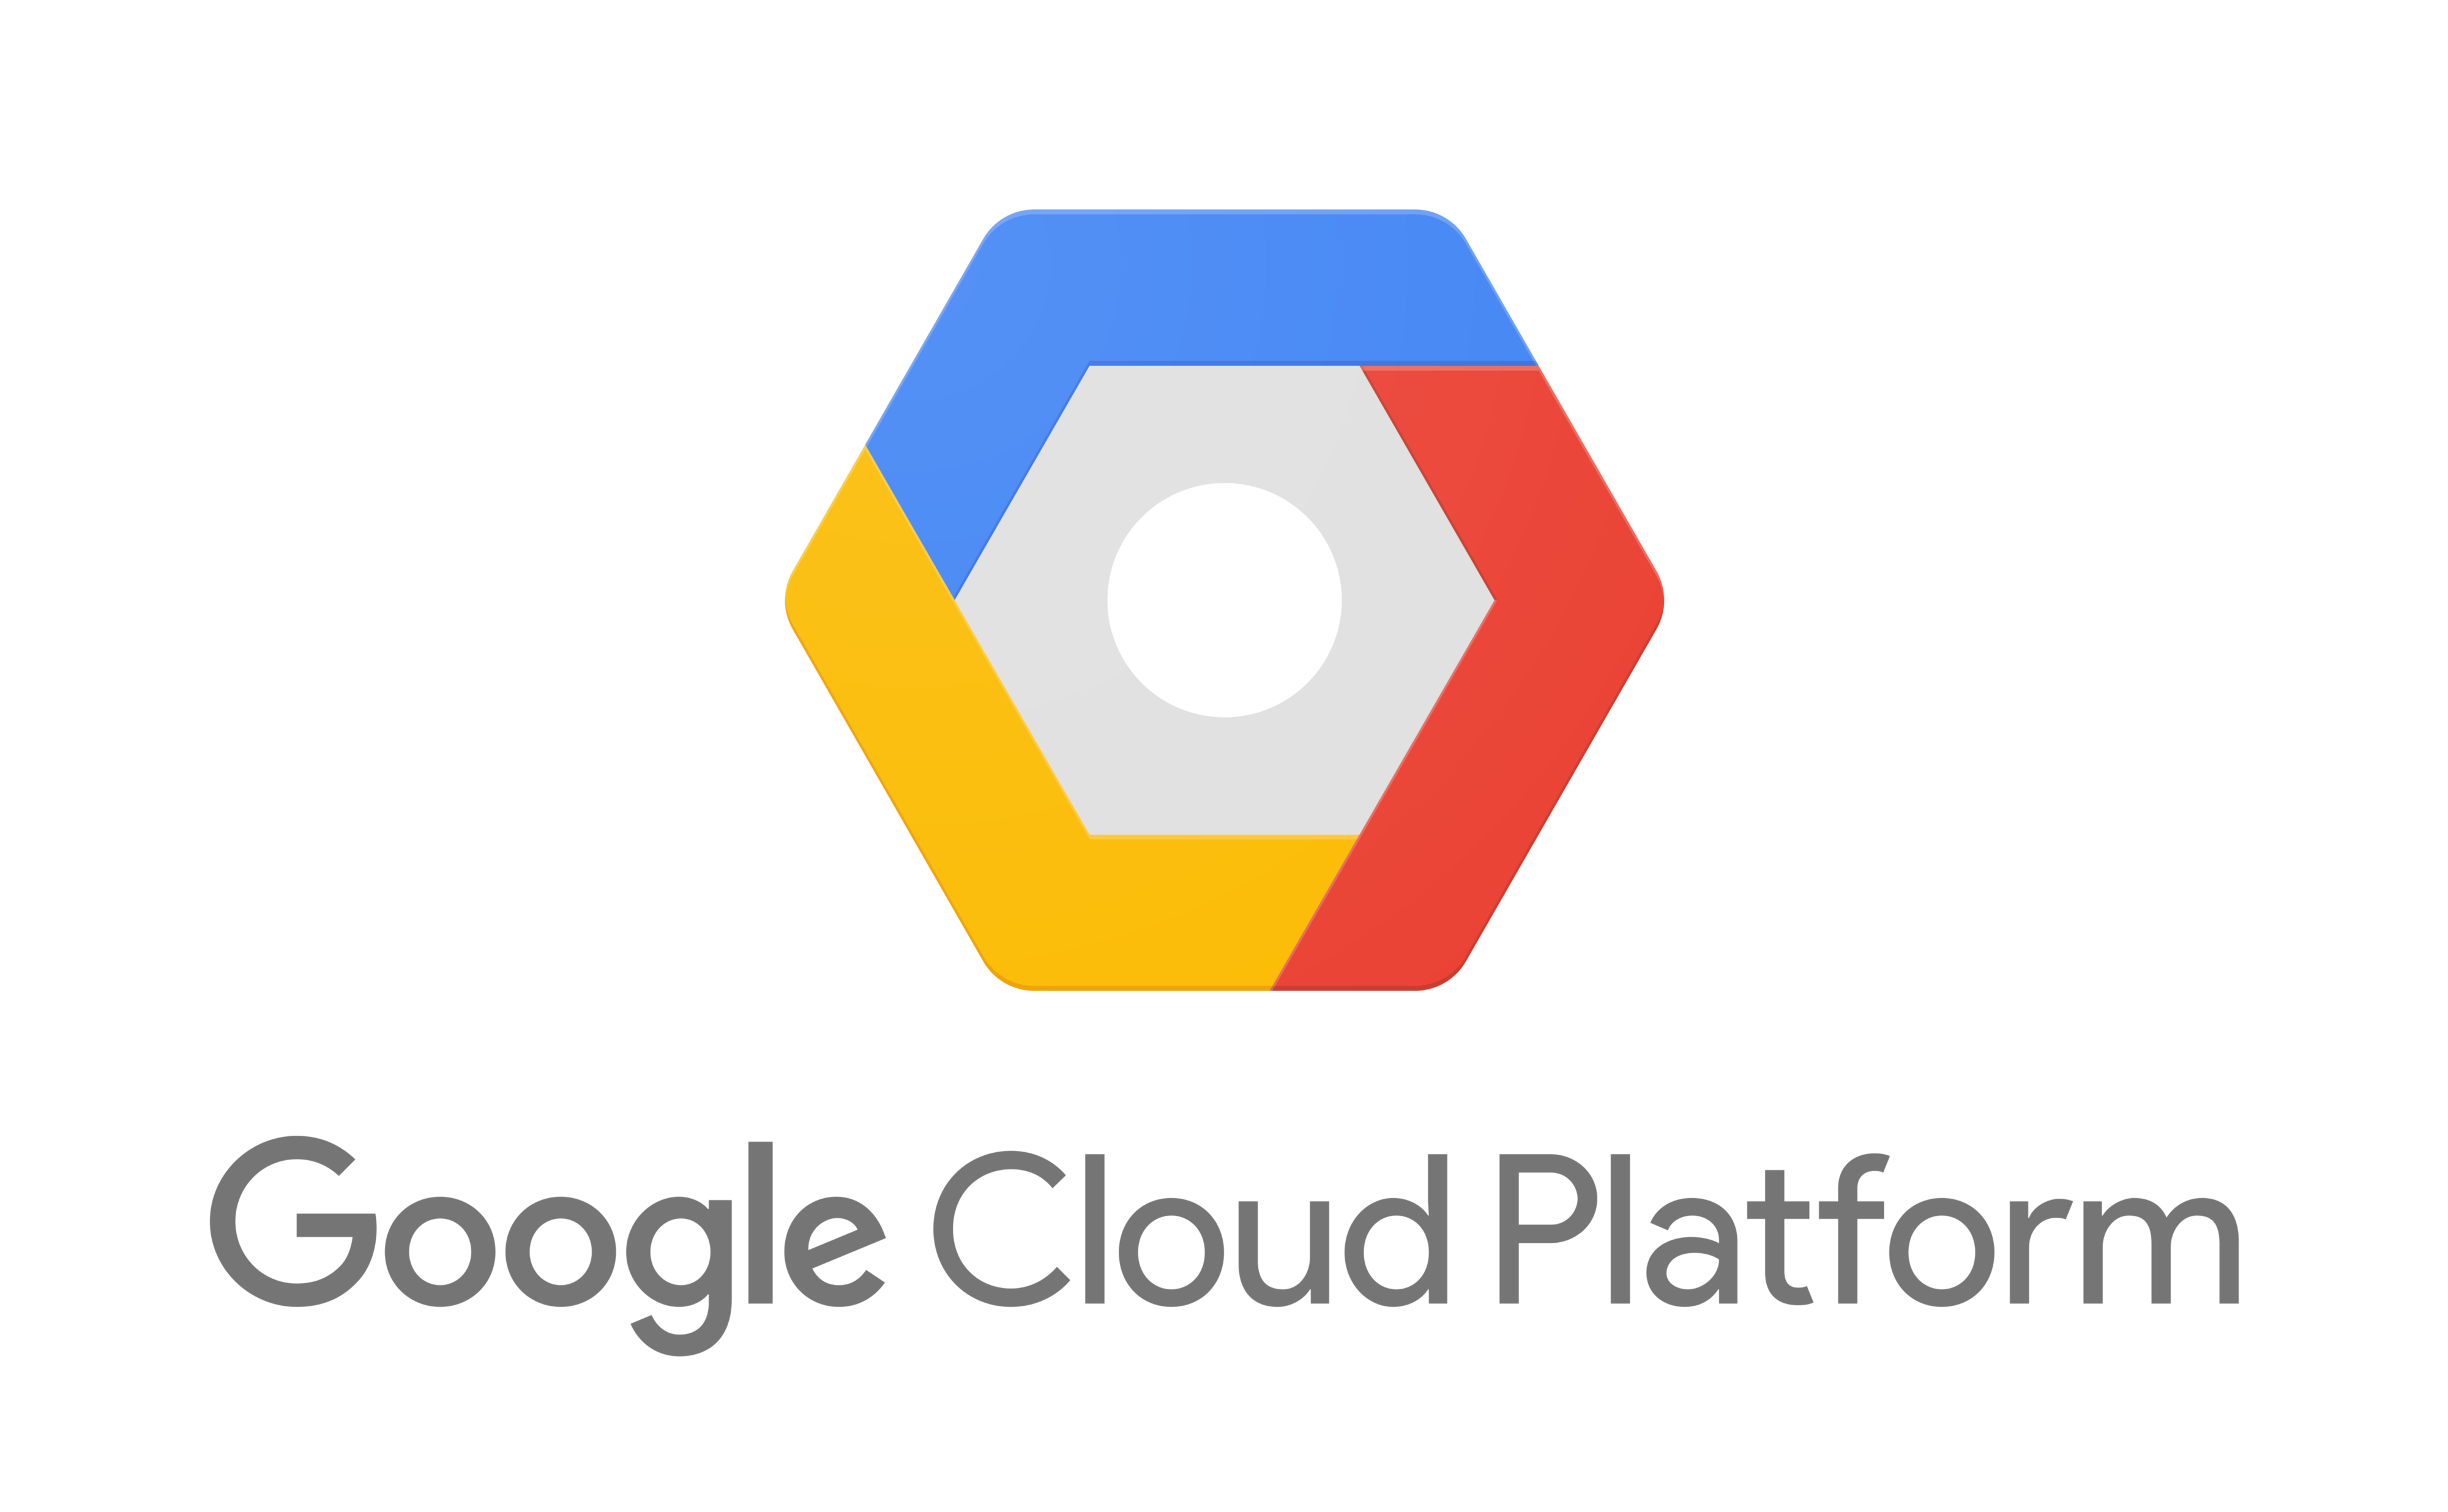 google-cloud-platform.png